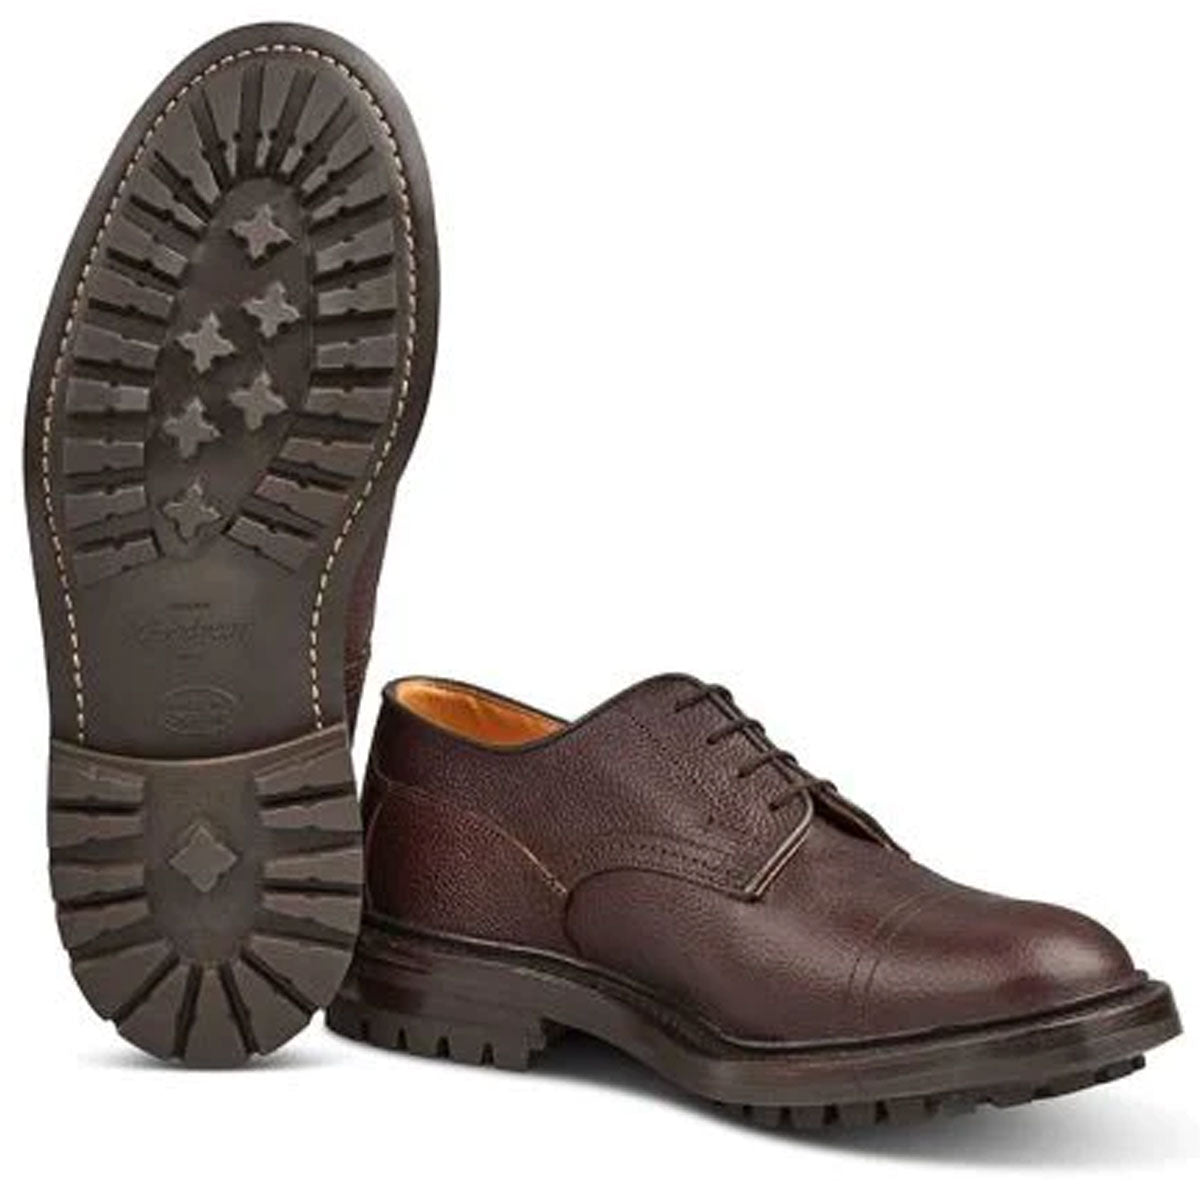 TRICKER'S Matlock Shoes - Mens - Brown Zug Grain